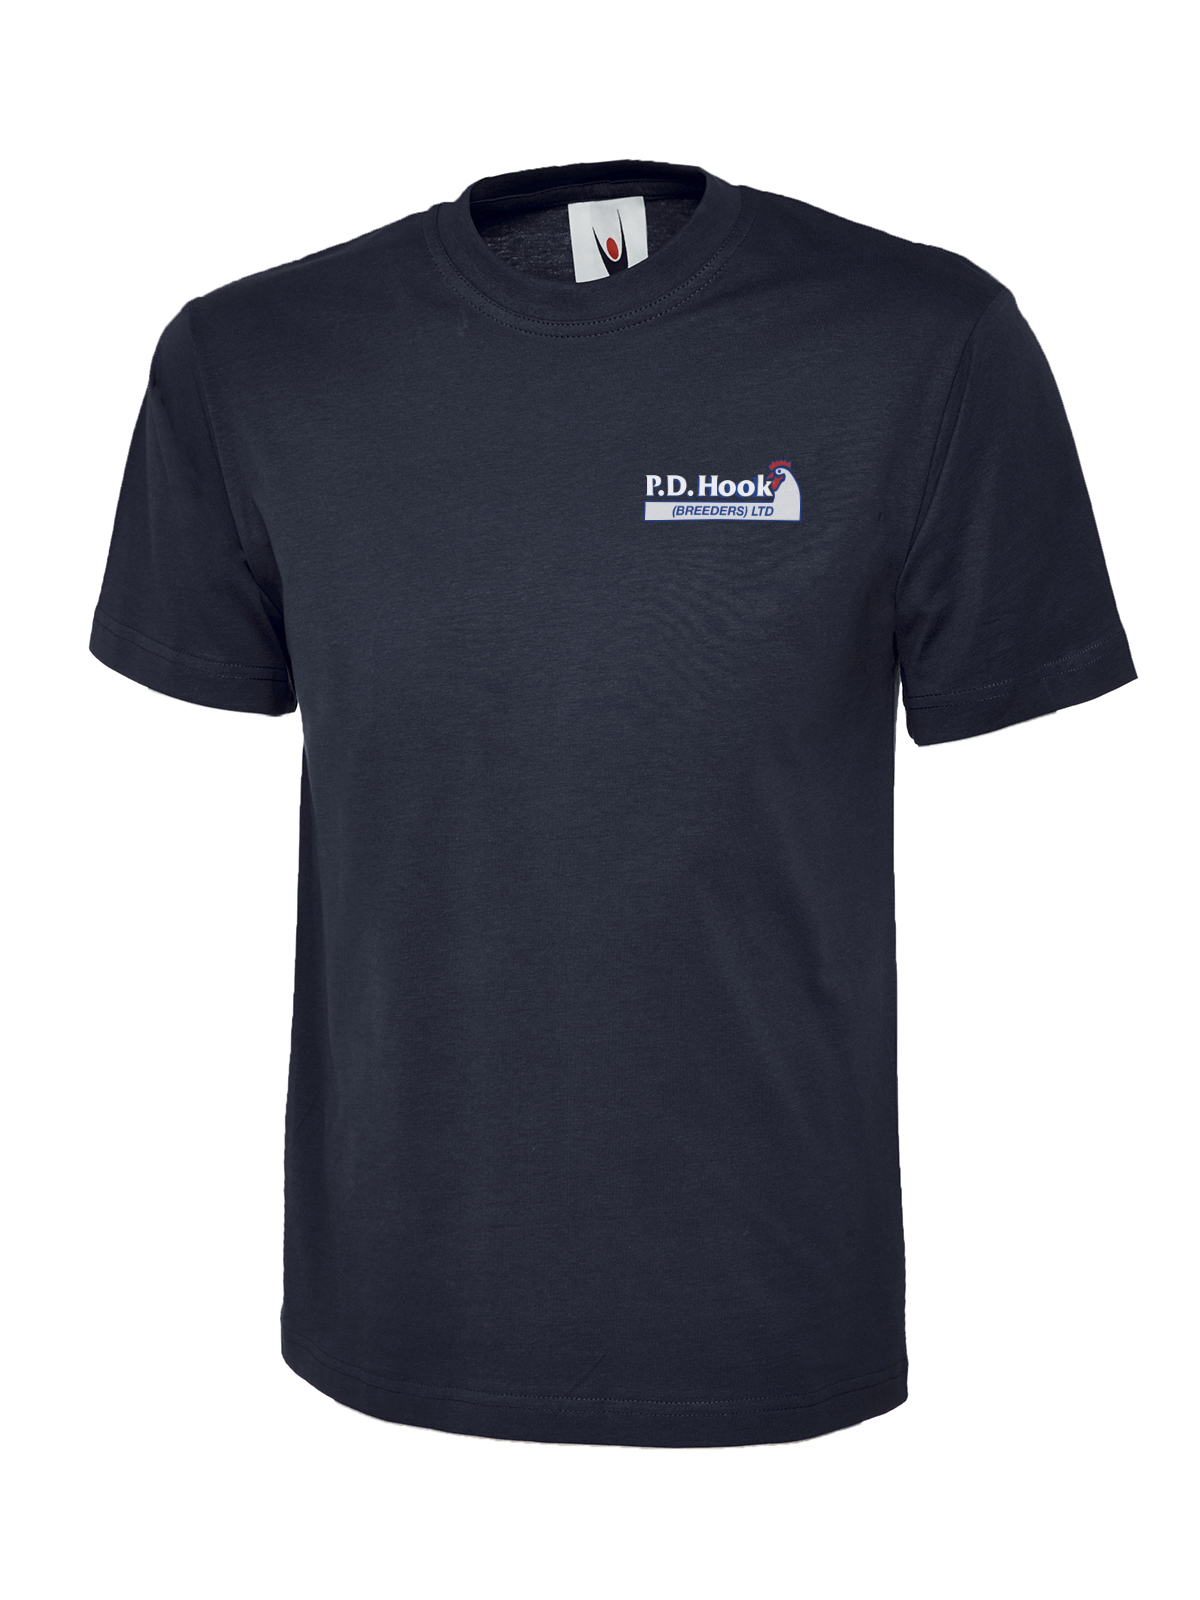 P D Hook (Breeders) Ltd - T-Shirt, Navy - Size 3XL